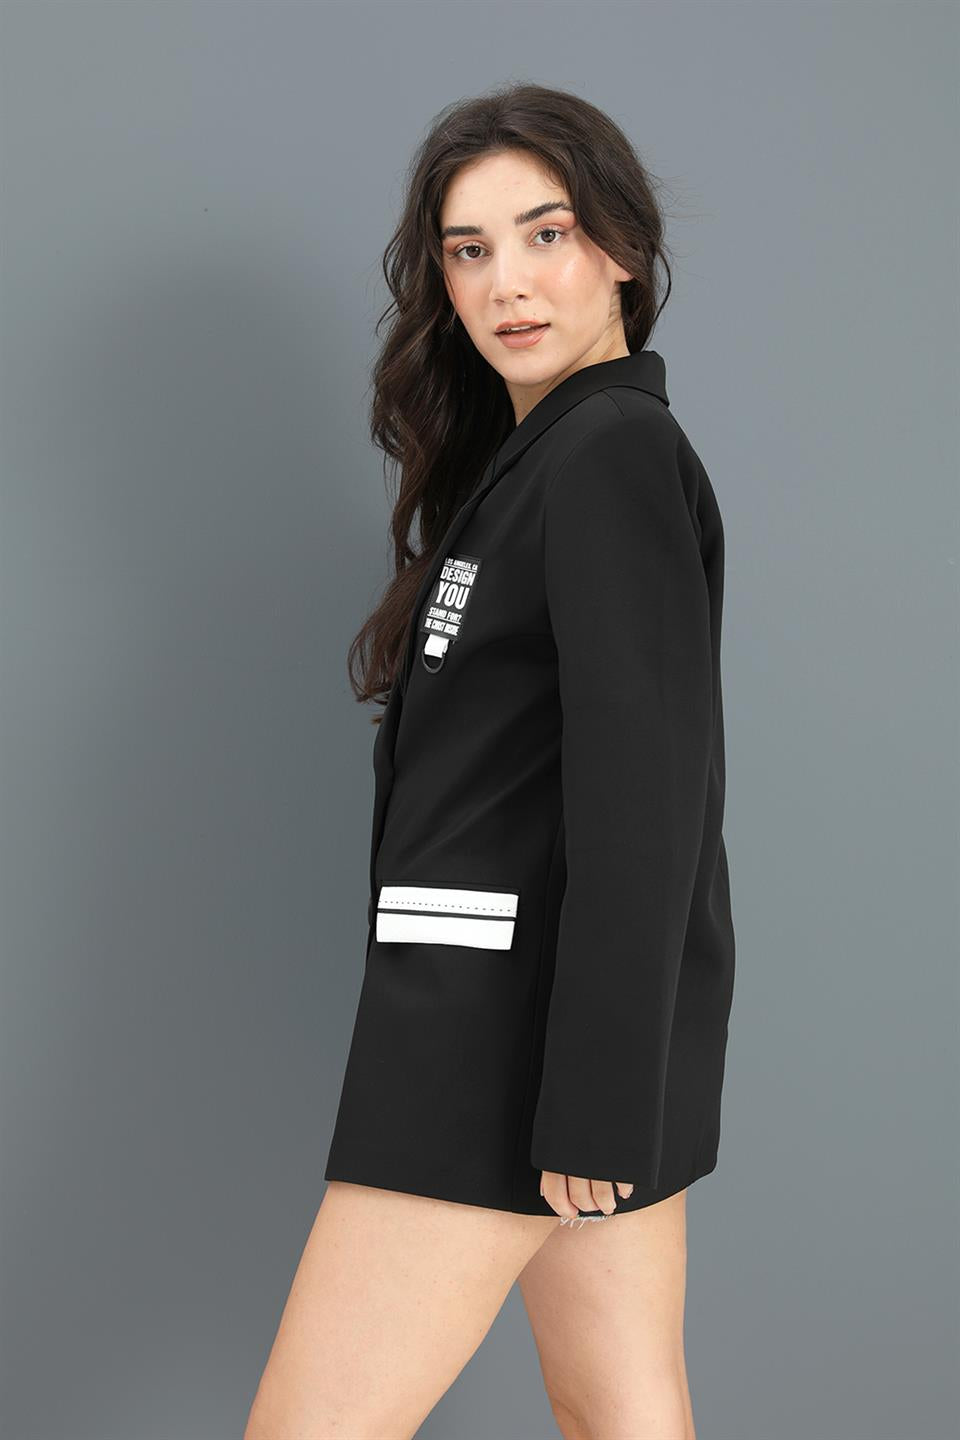 Women's Jacket Pocket Cover Garnish Atlas Fabric - Black - STREETMODE™